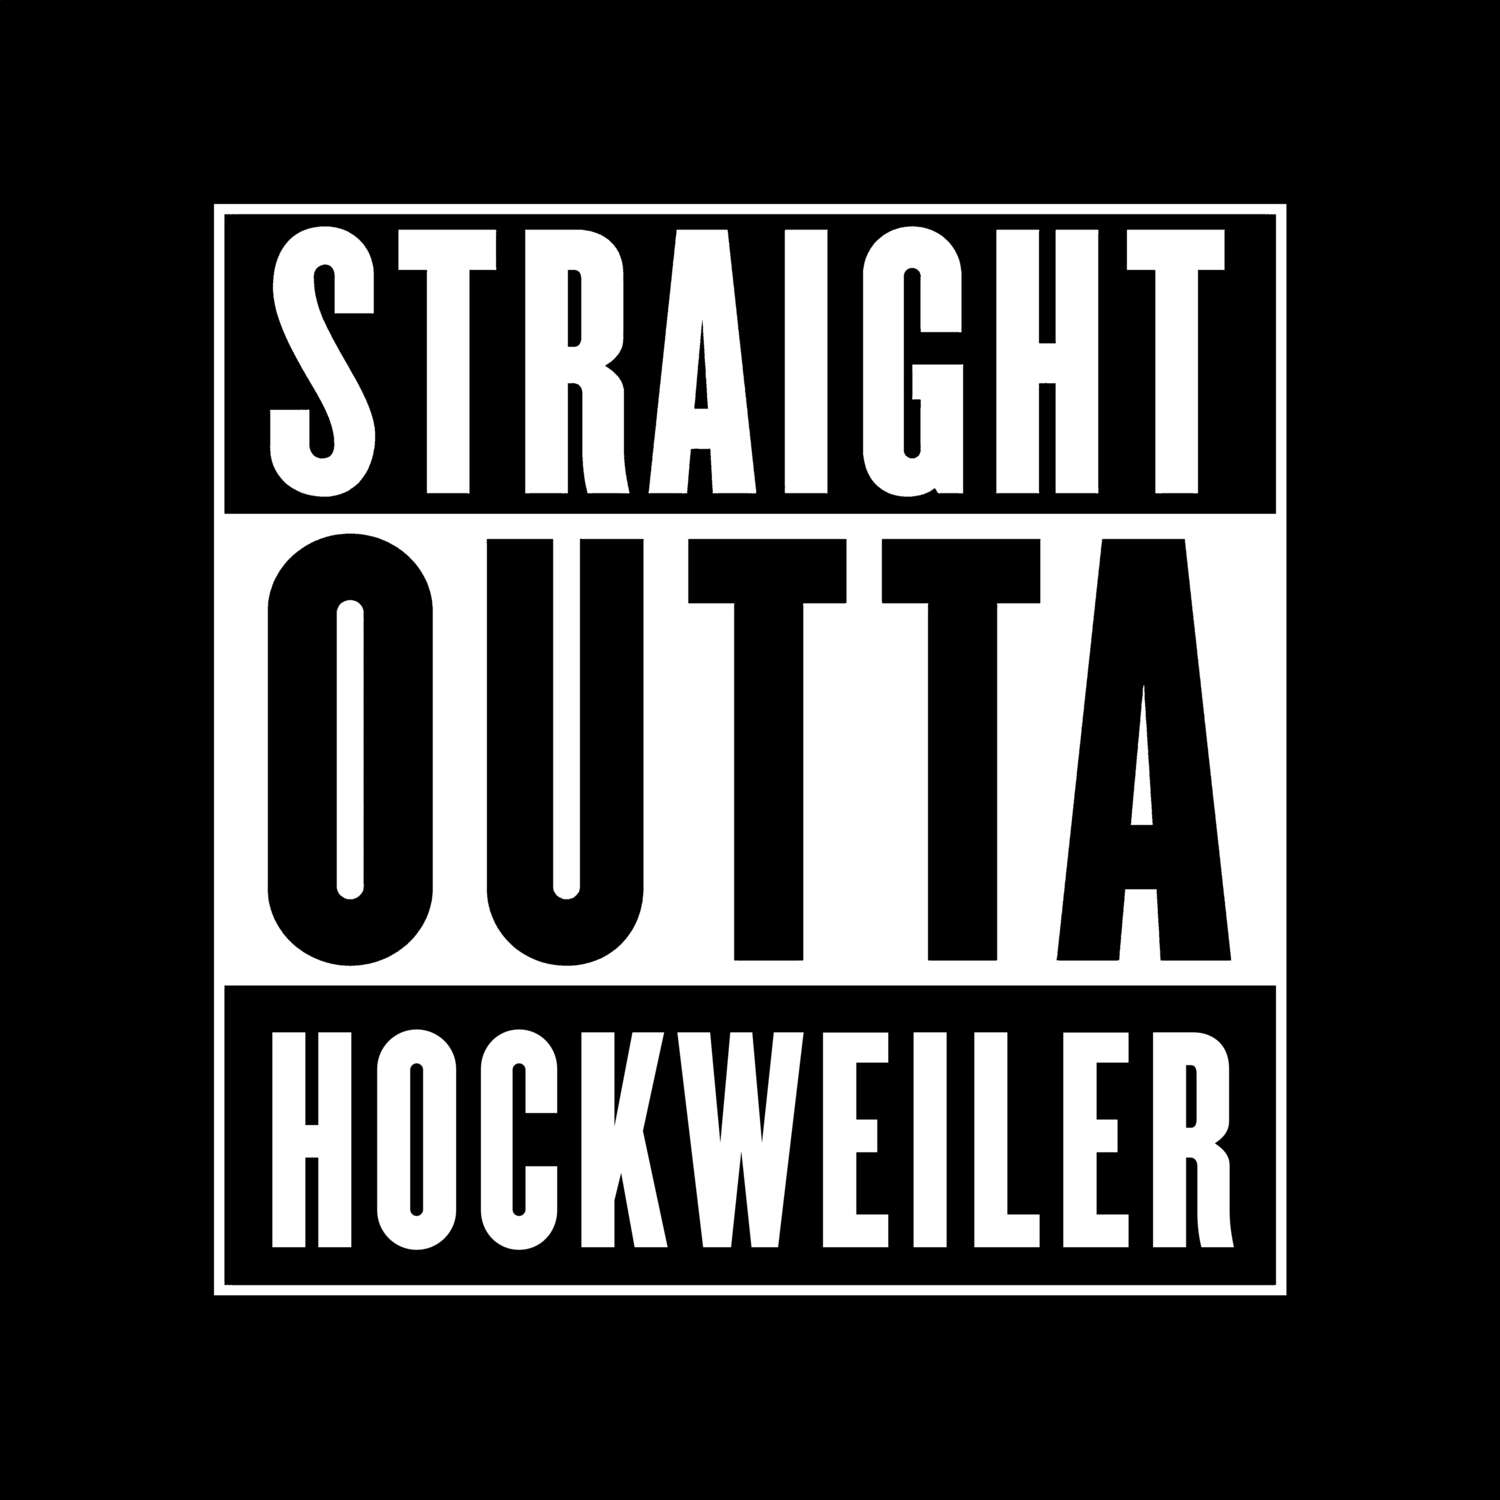 Hockweiler T-Shirt »Straight Outta«